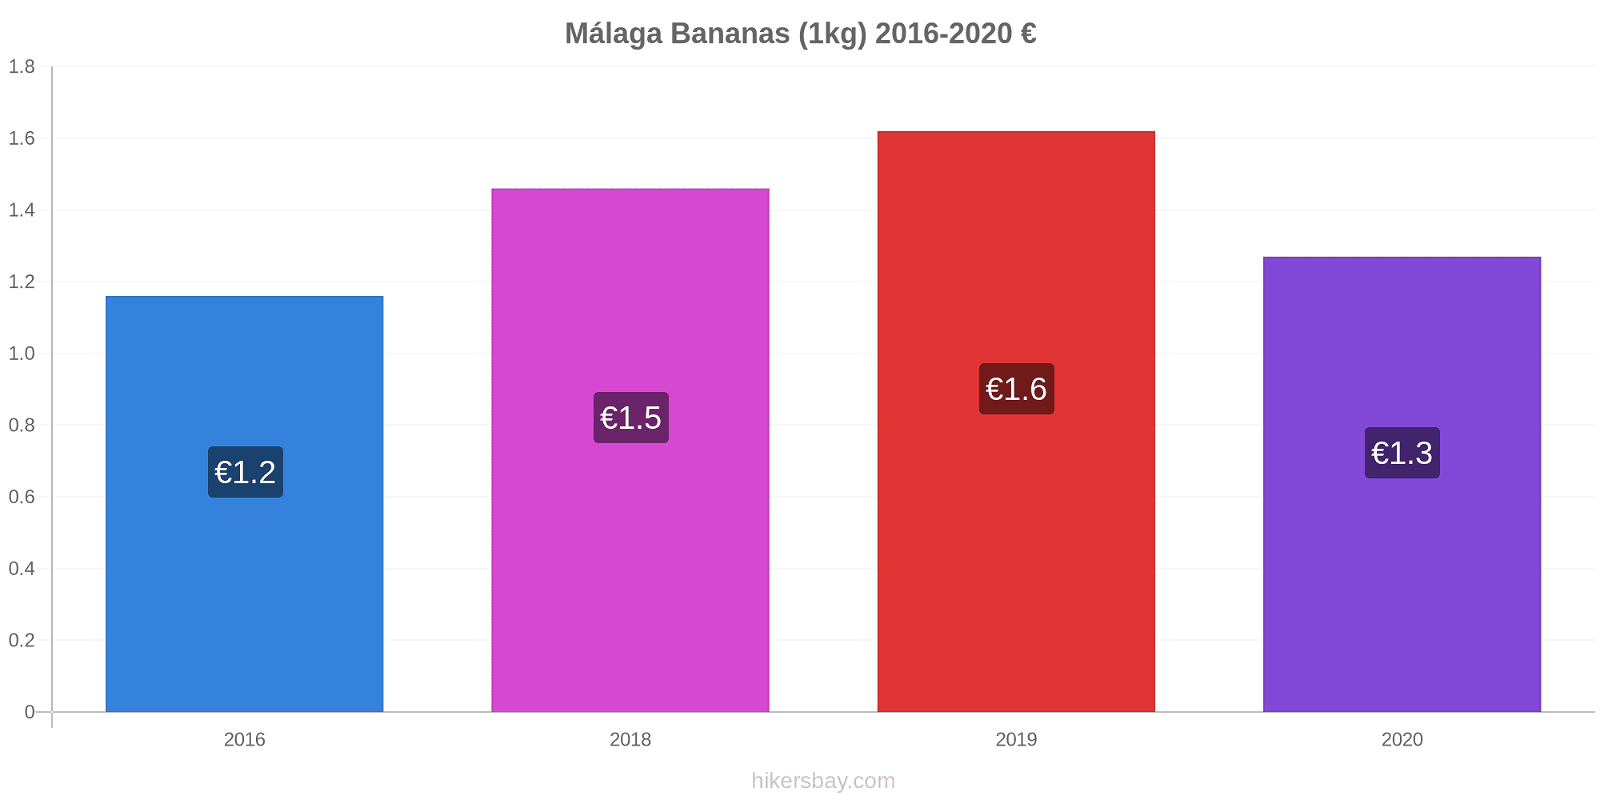 Málaga price changes Bananas (1kg) hikersbay.com